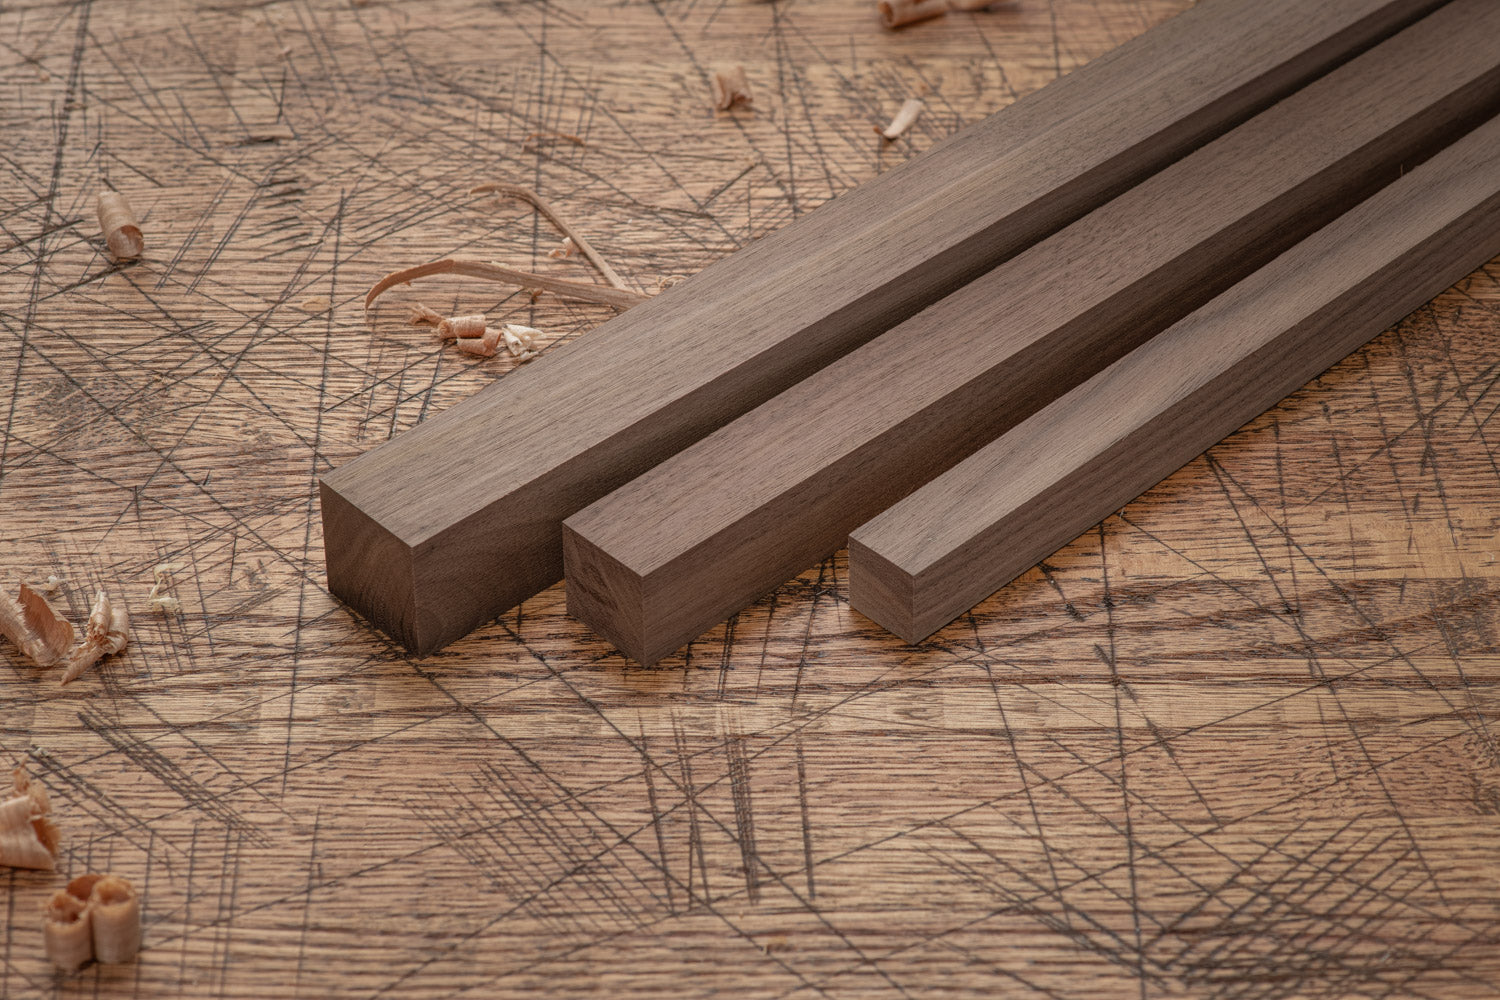 6/4 (1-5/16) Hard Maple - Dimensional Lumber – North Castle